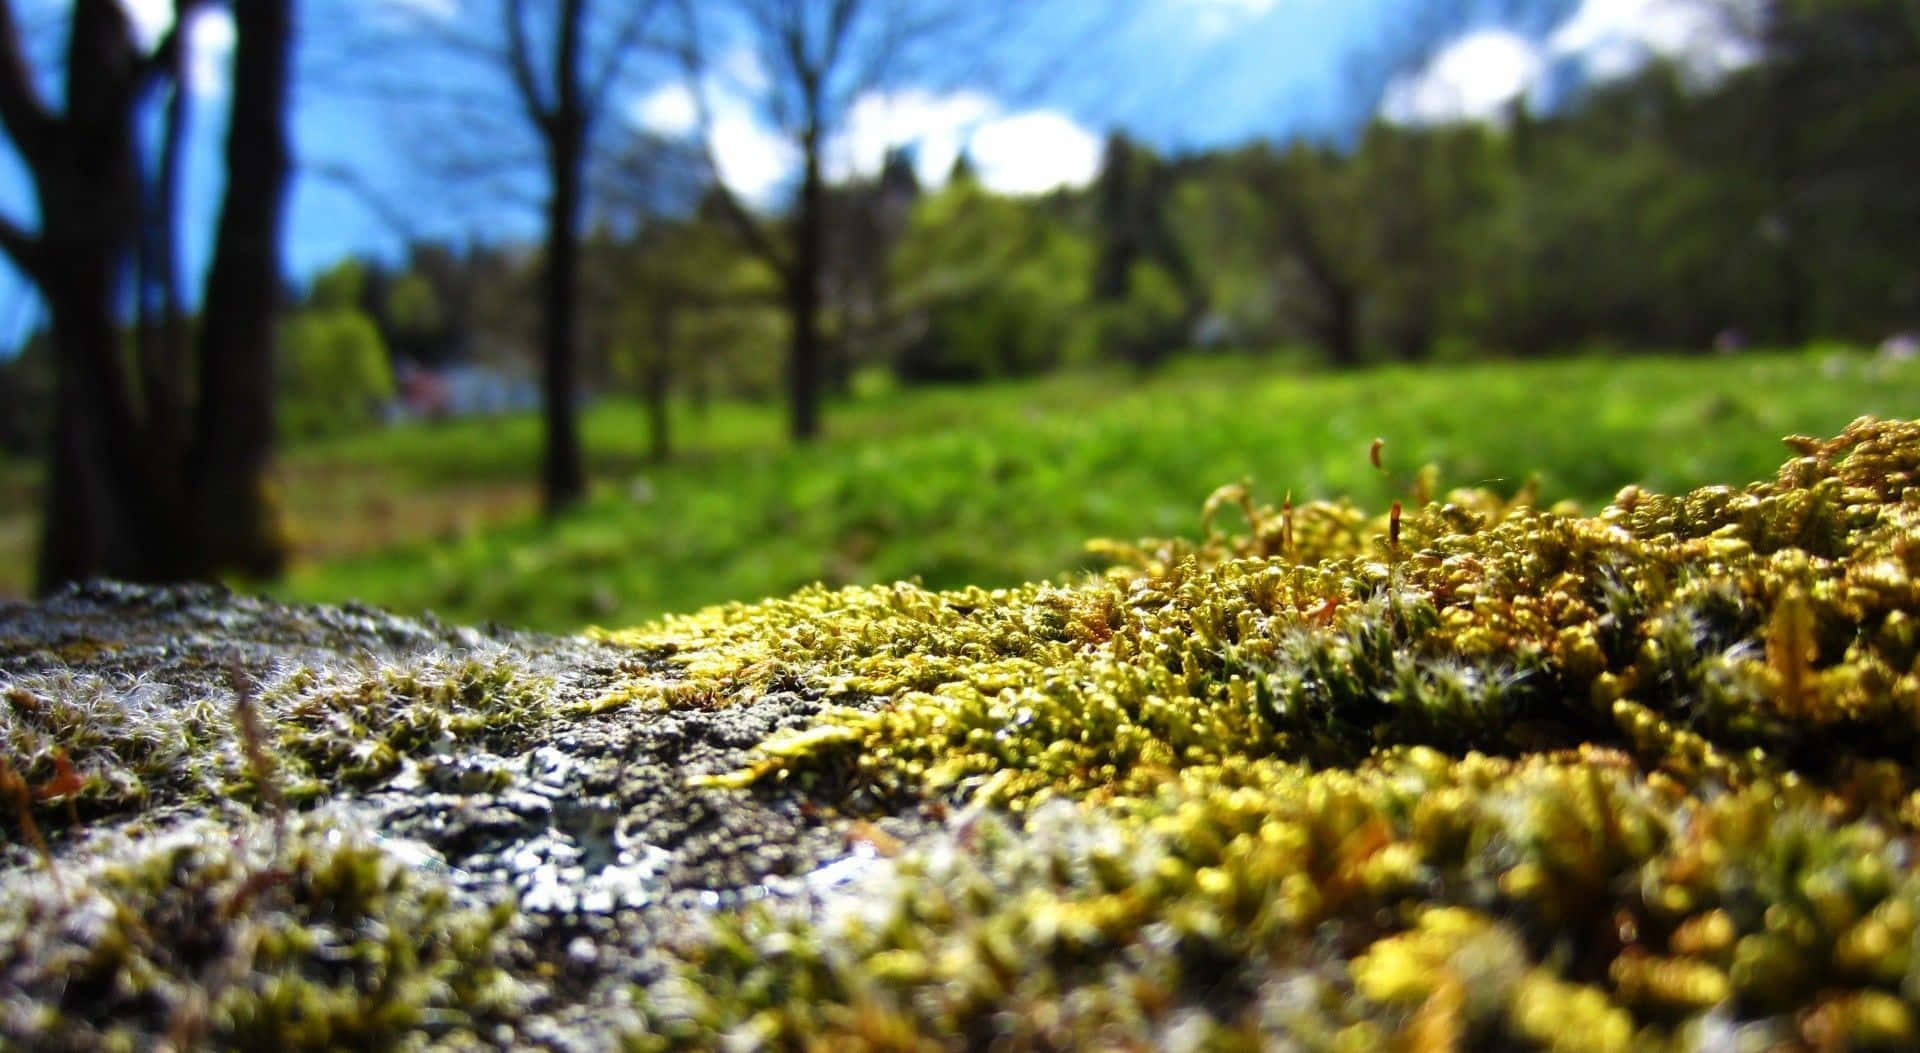 The Beauty of Moss - A Closeup of a Rich, Green Moss Growth